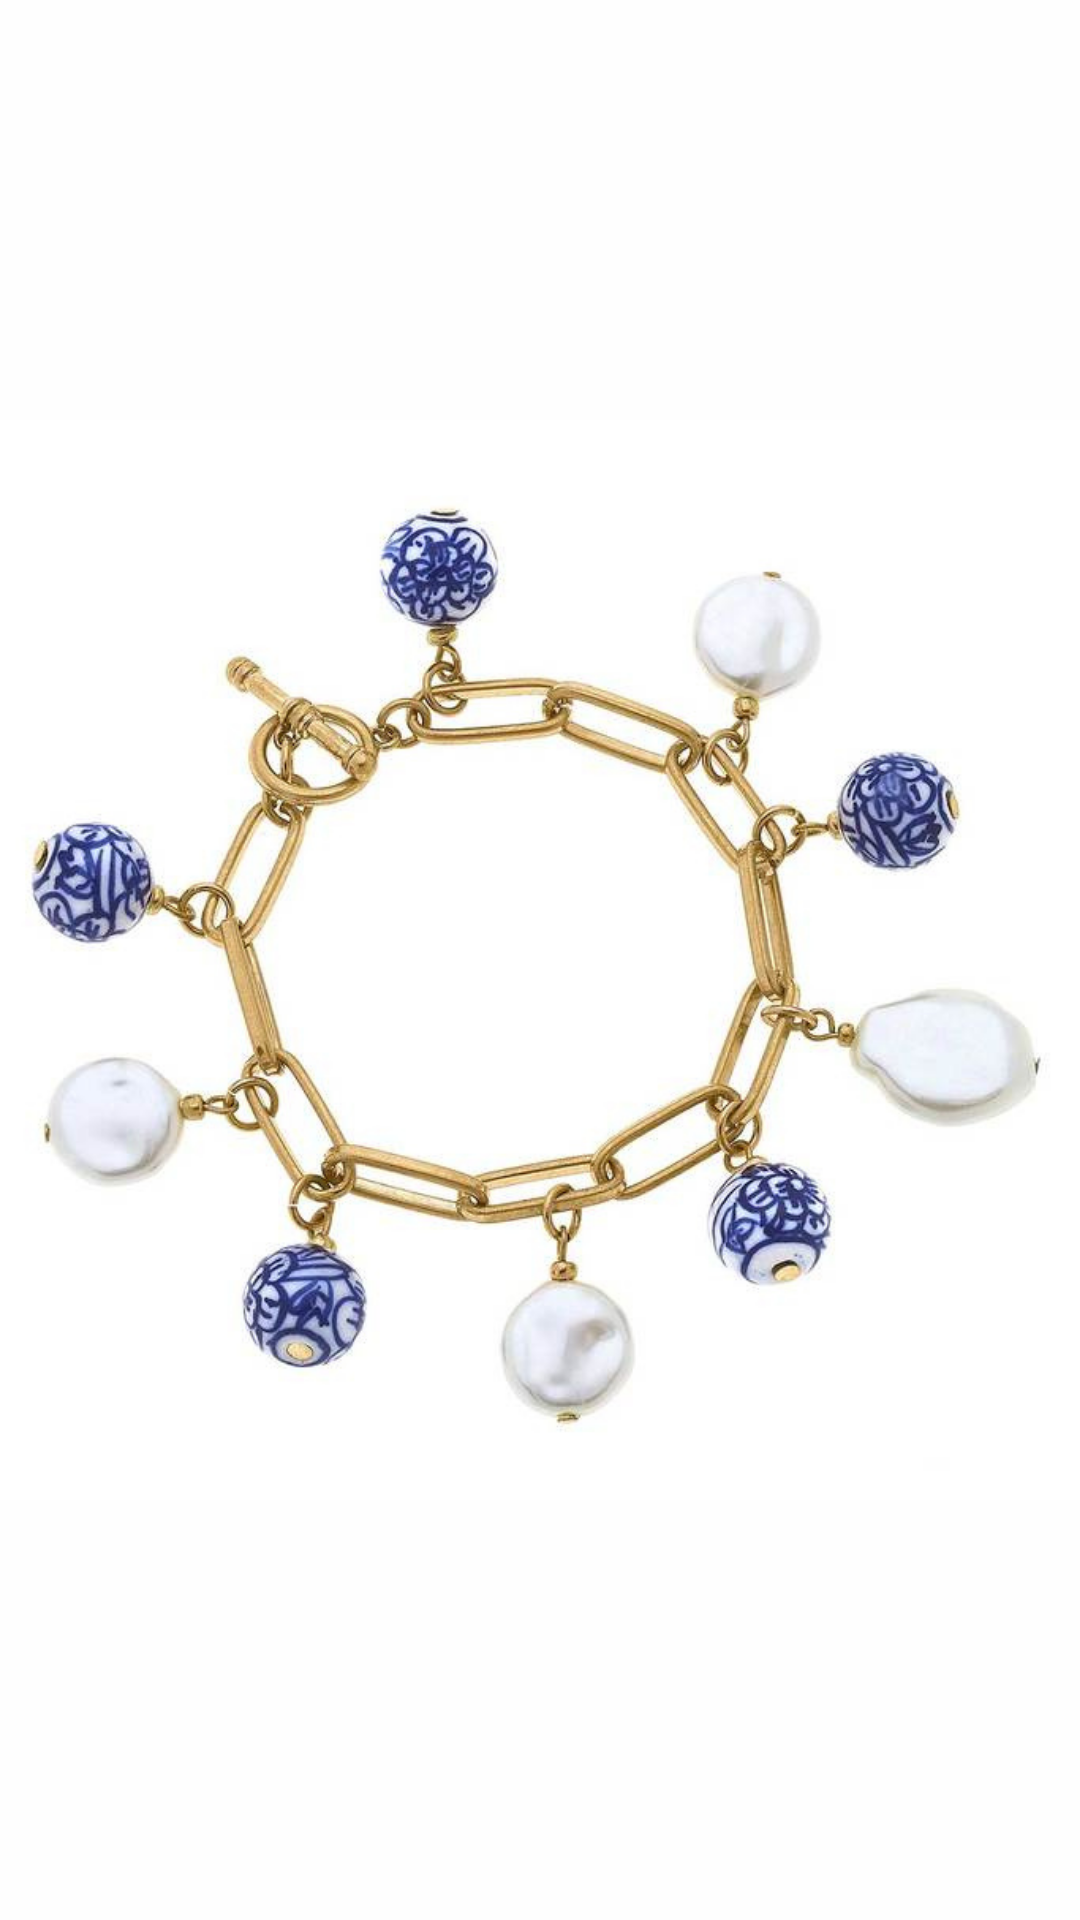 Paloma Chinoiserie Charm Bracelet in Blue & White